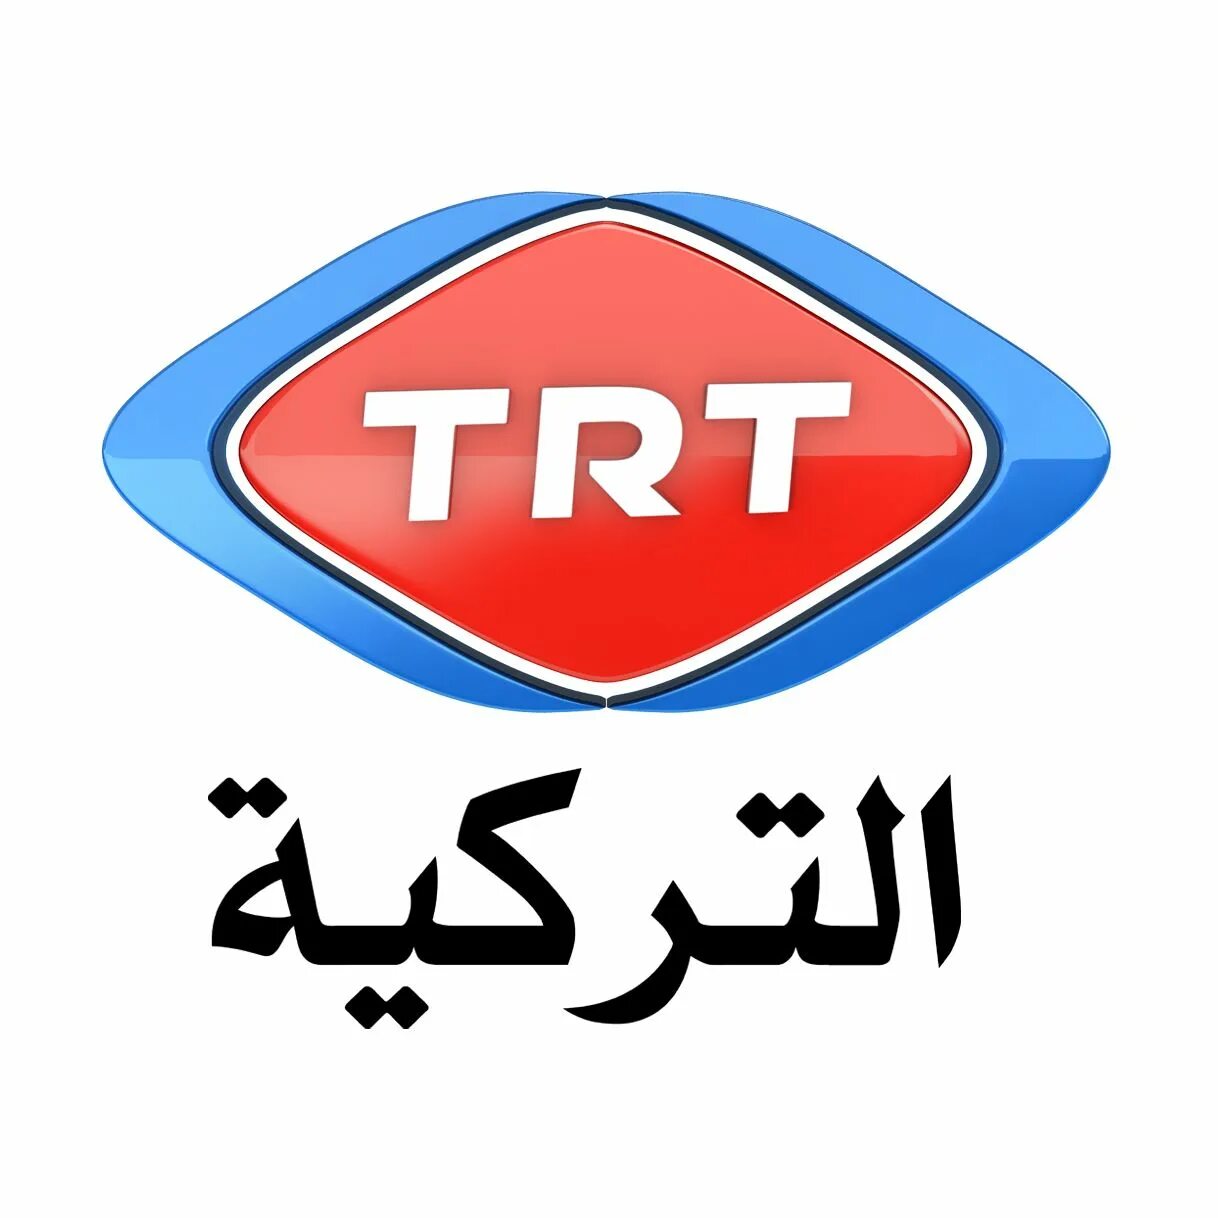 Trt canlı yayın. TRT. TRT TV. TRT HD. TRT logo.